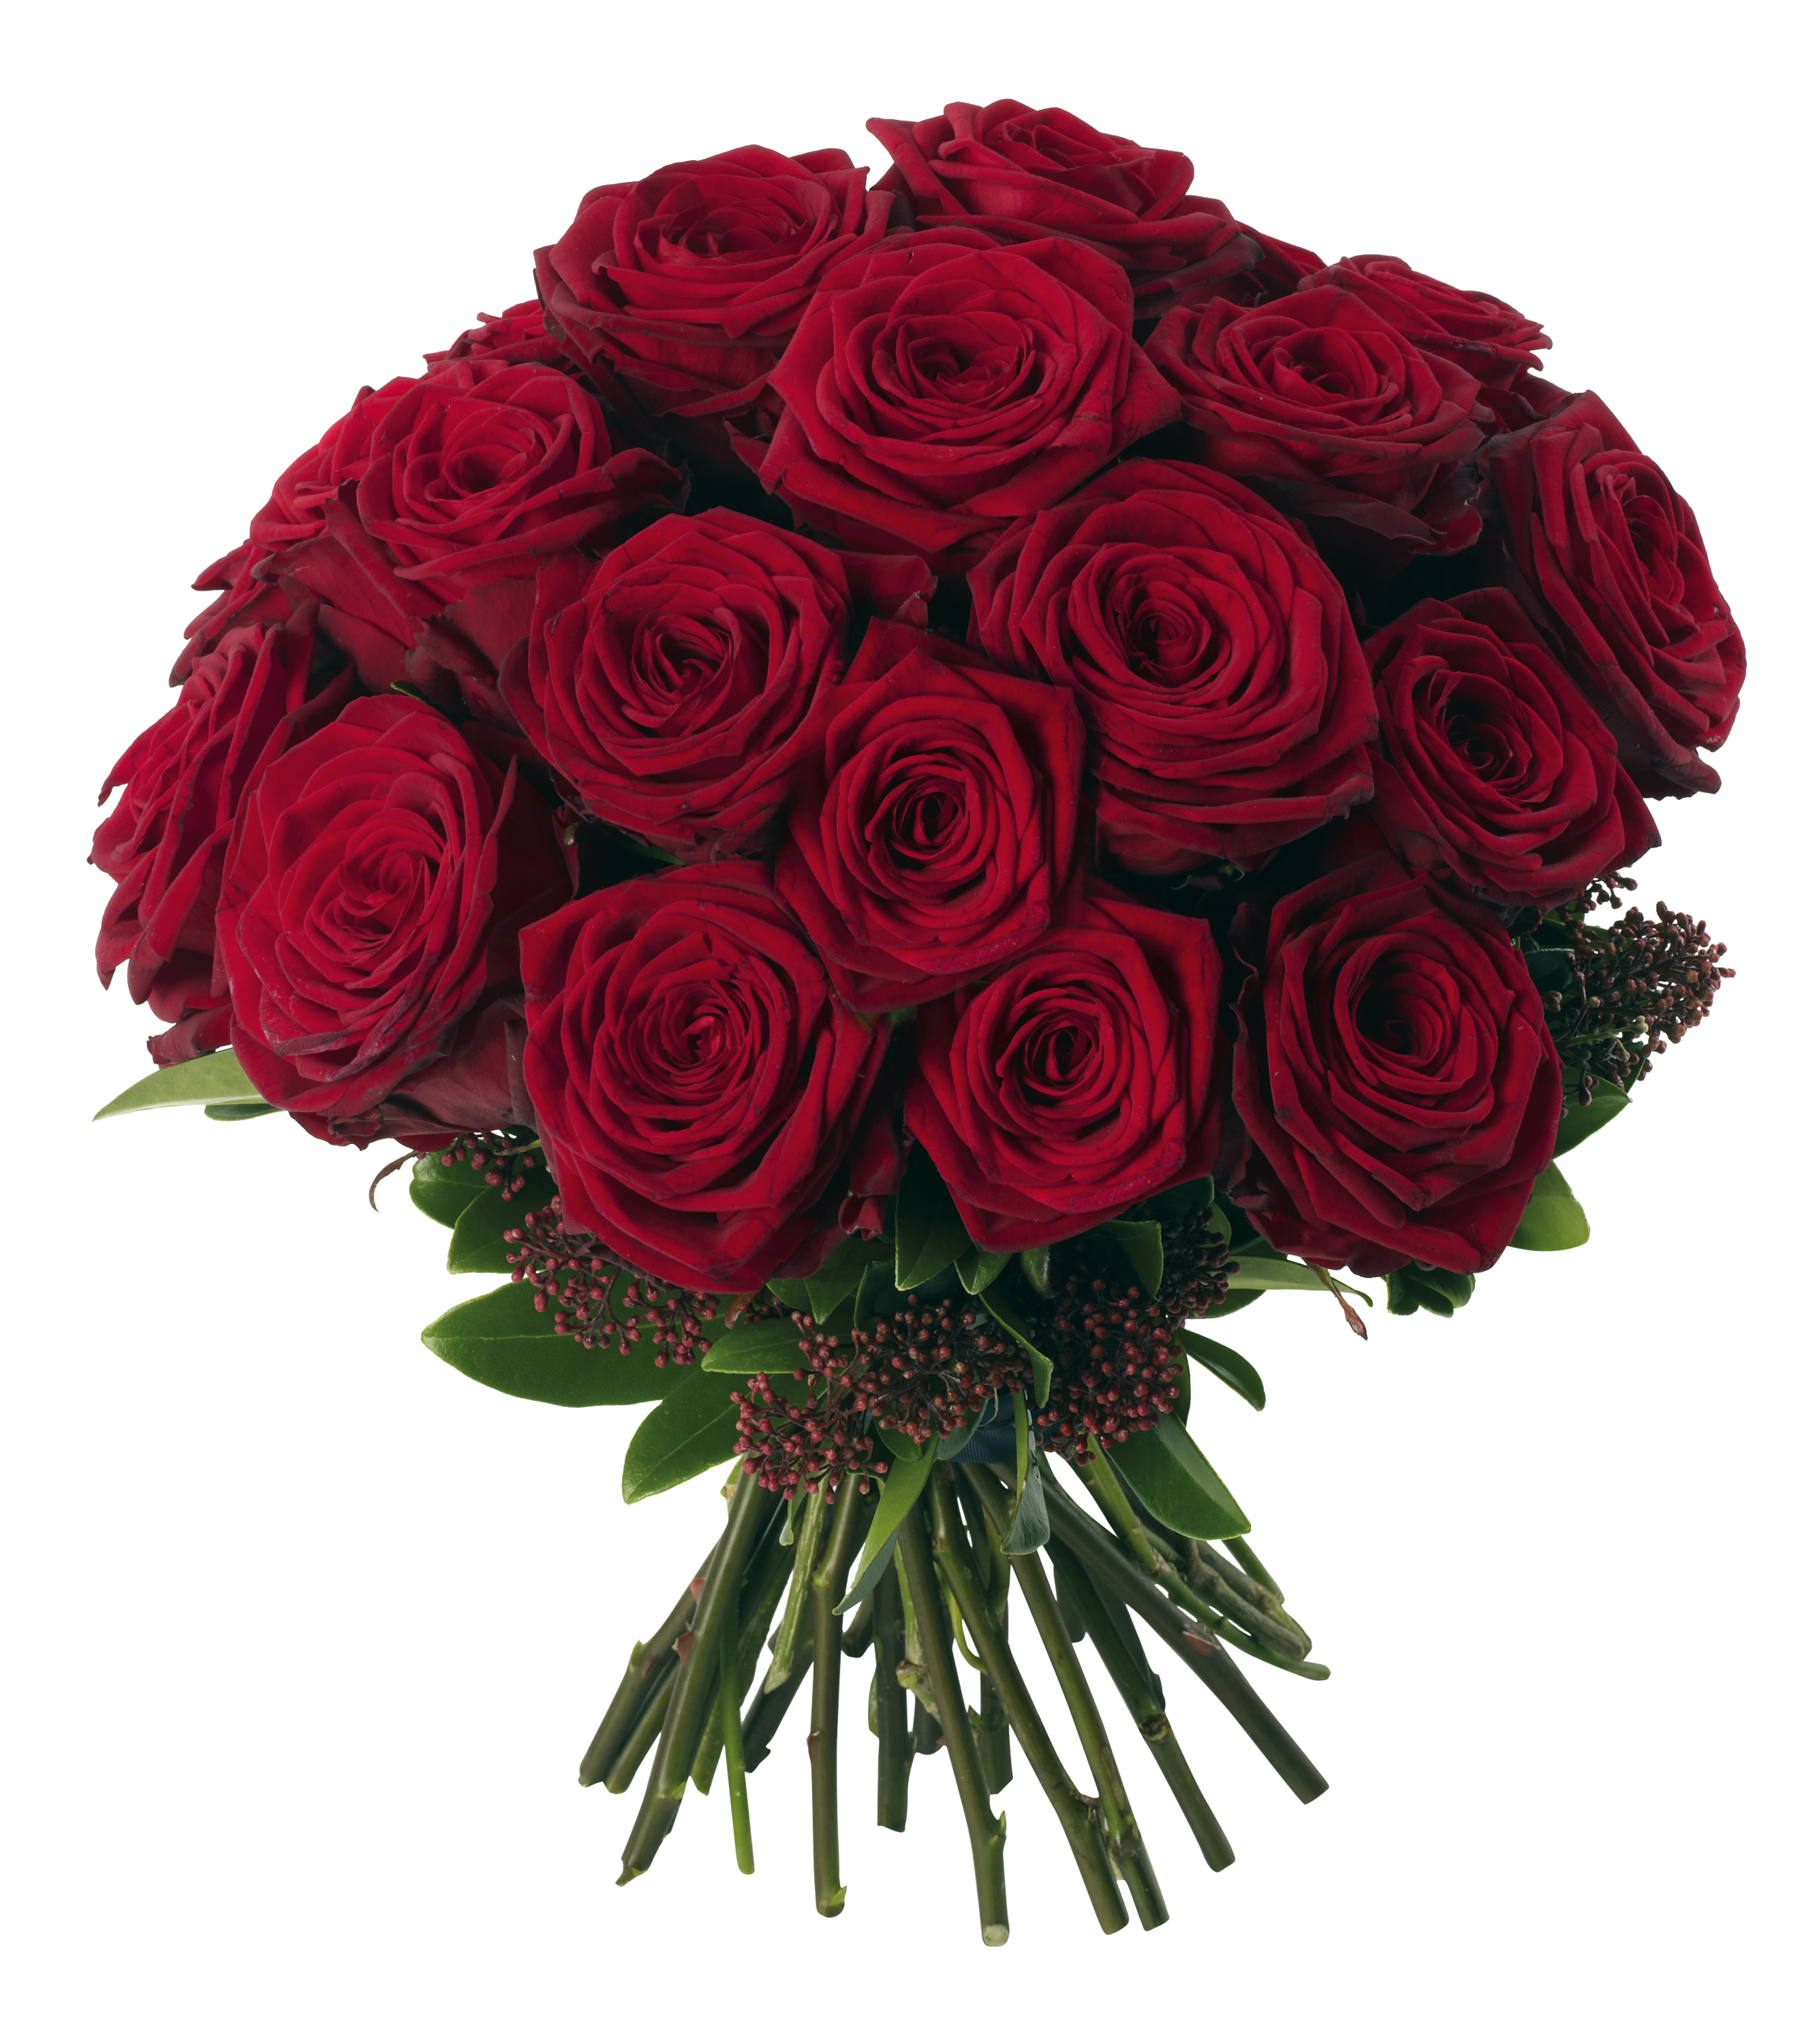 Immagine di PNG del bouquet di rosa fresca